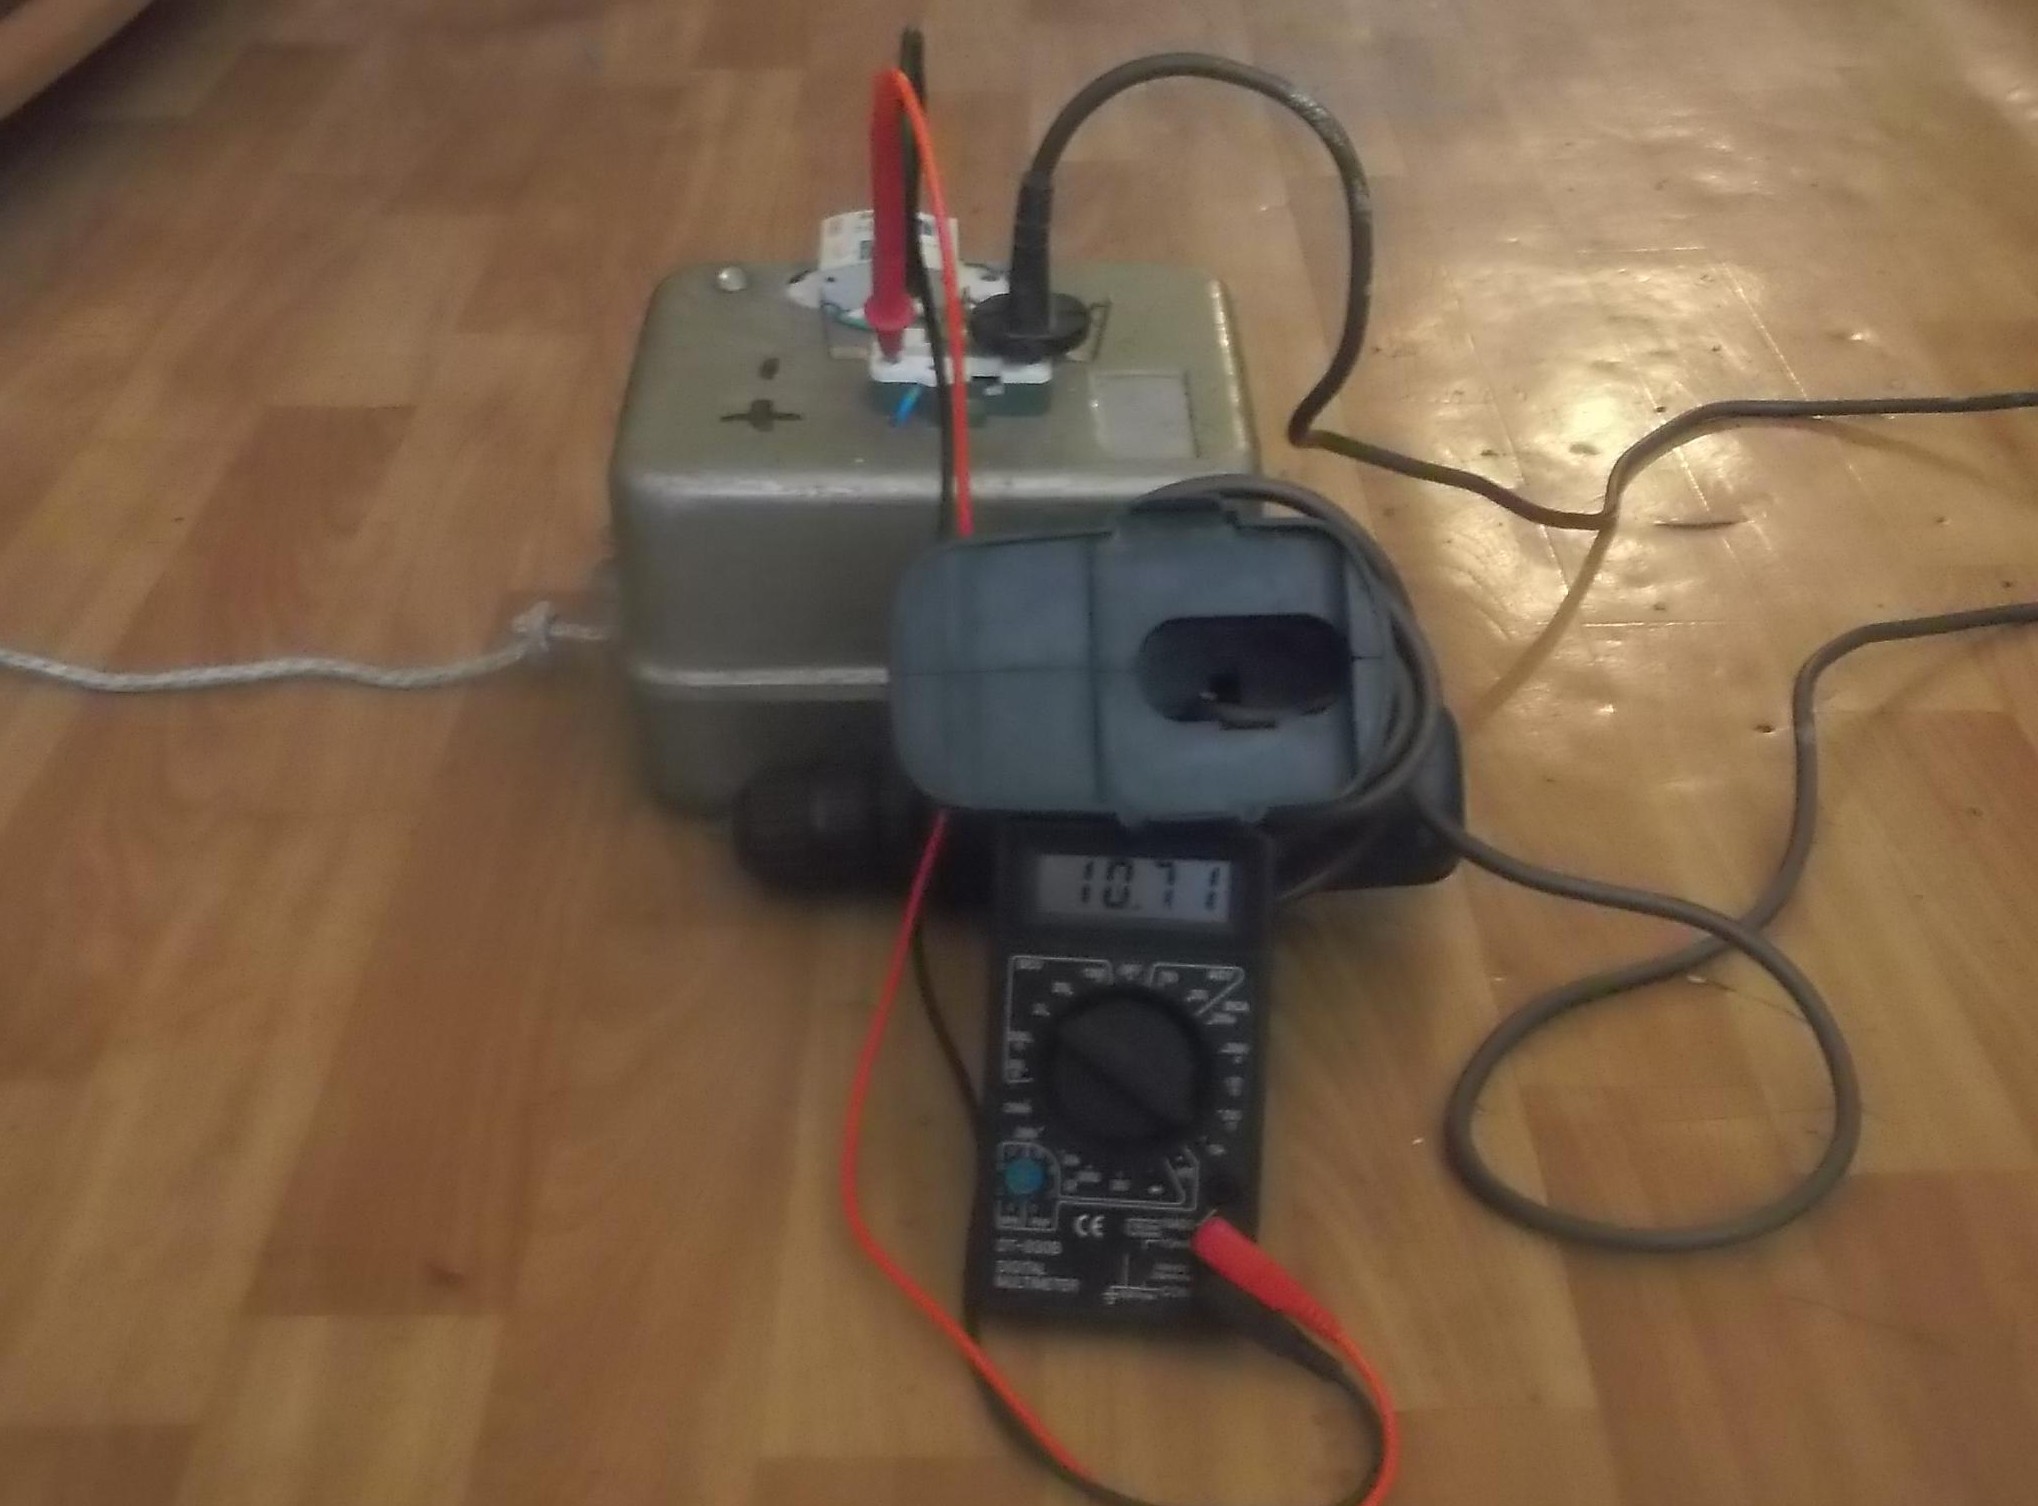 Как зарядить аккумулятор шуруповерта без зарядного устройства?